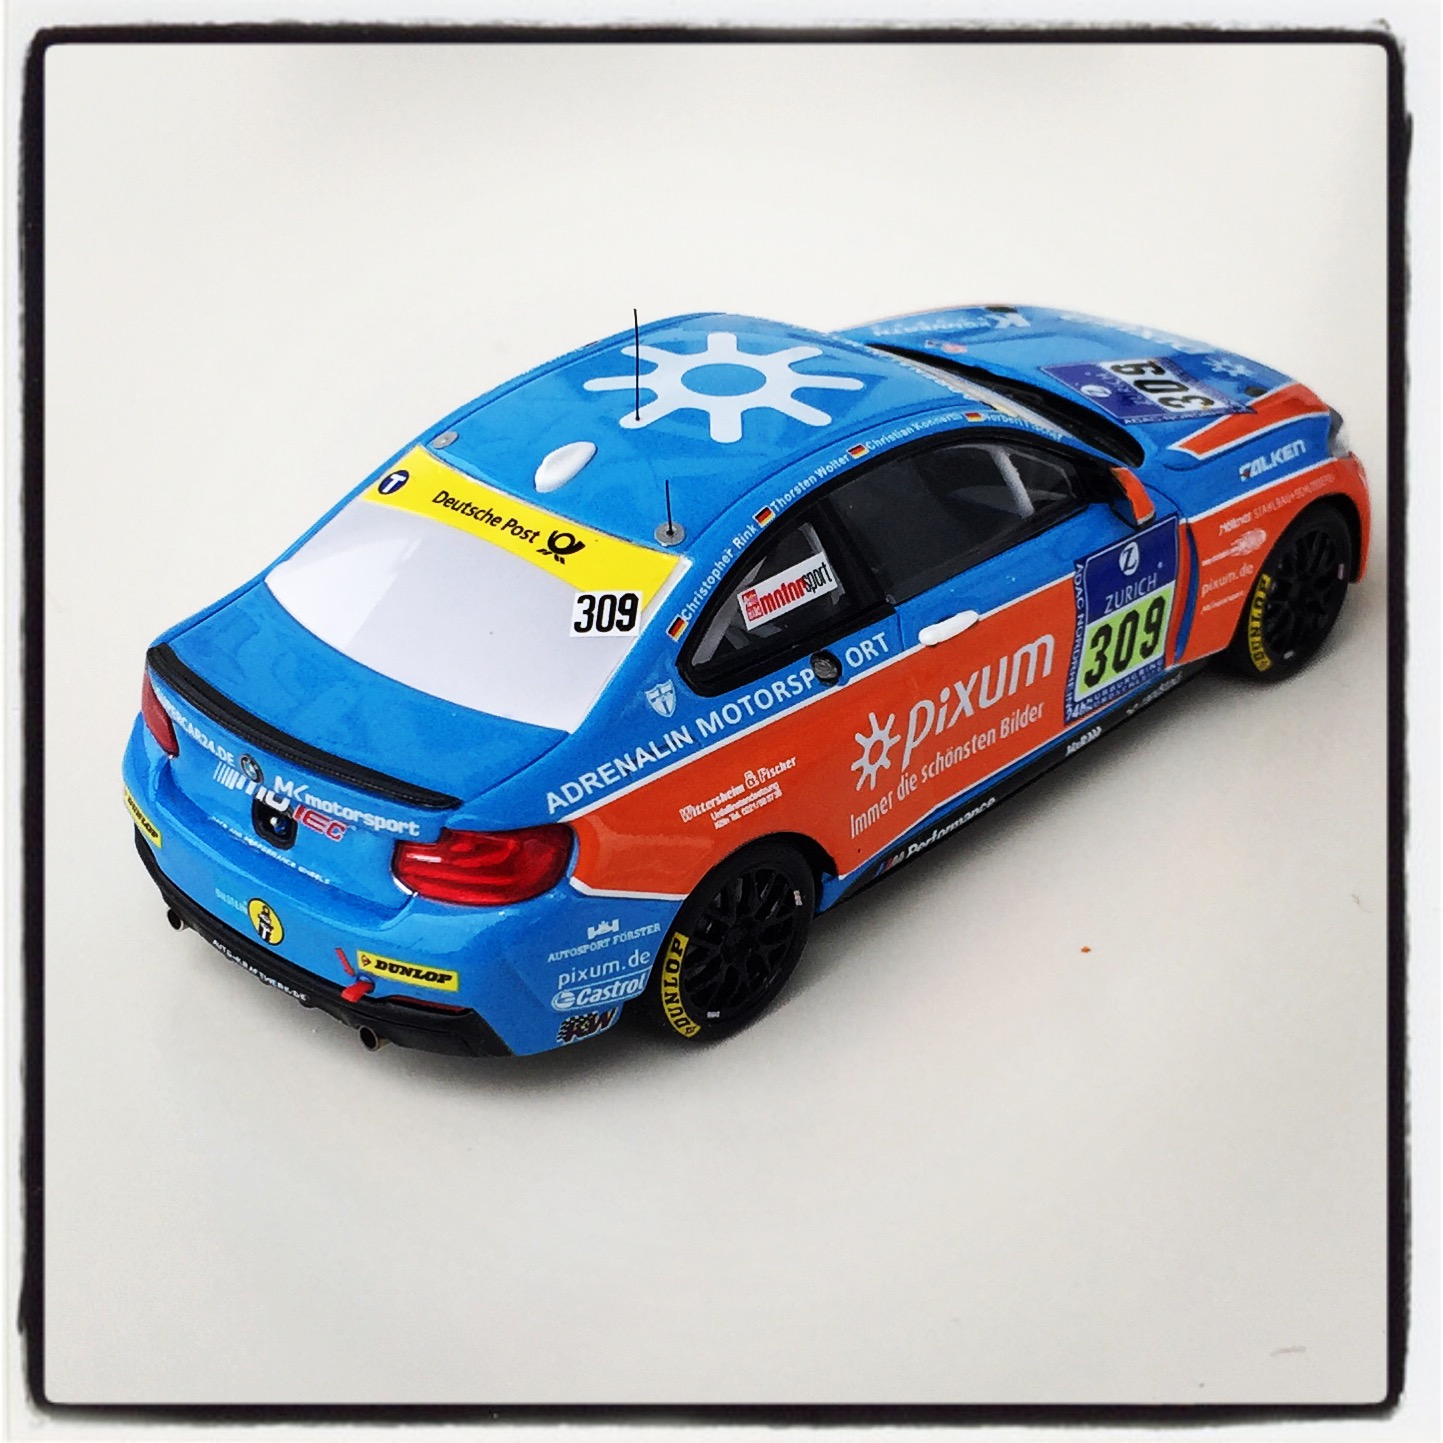 BMW M235i (F22) Racing, Pixum Team - Adrenalin Motorsport, 24h Nurburgring 2015, #309 Fischer/Konnerth/Wolter/Rink, le 1 of 250pcs. (minichamps)